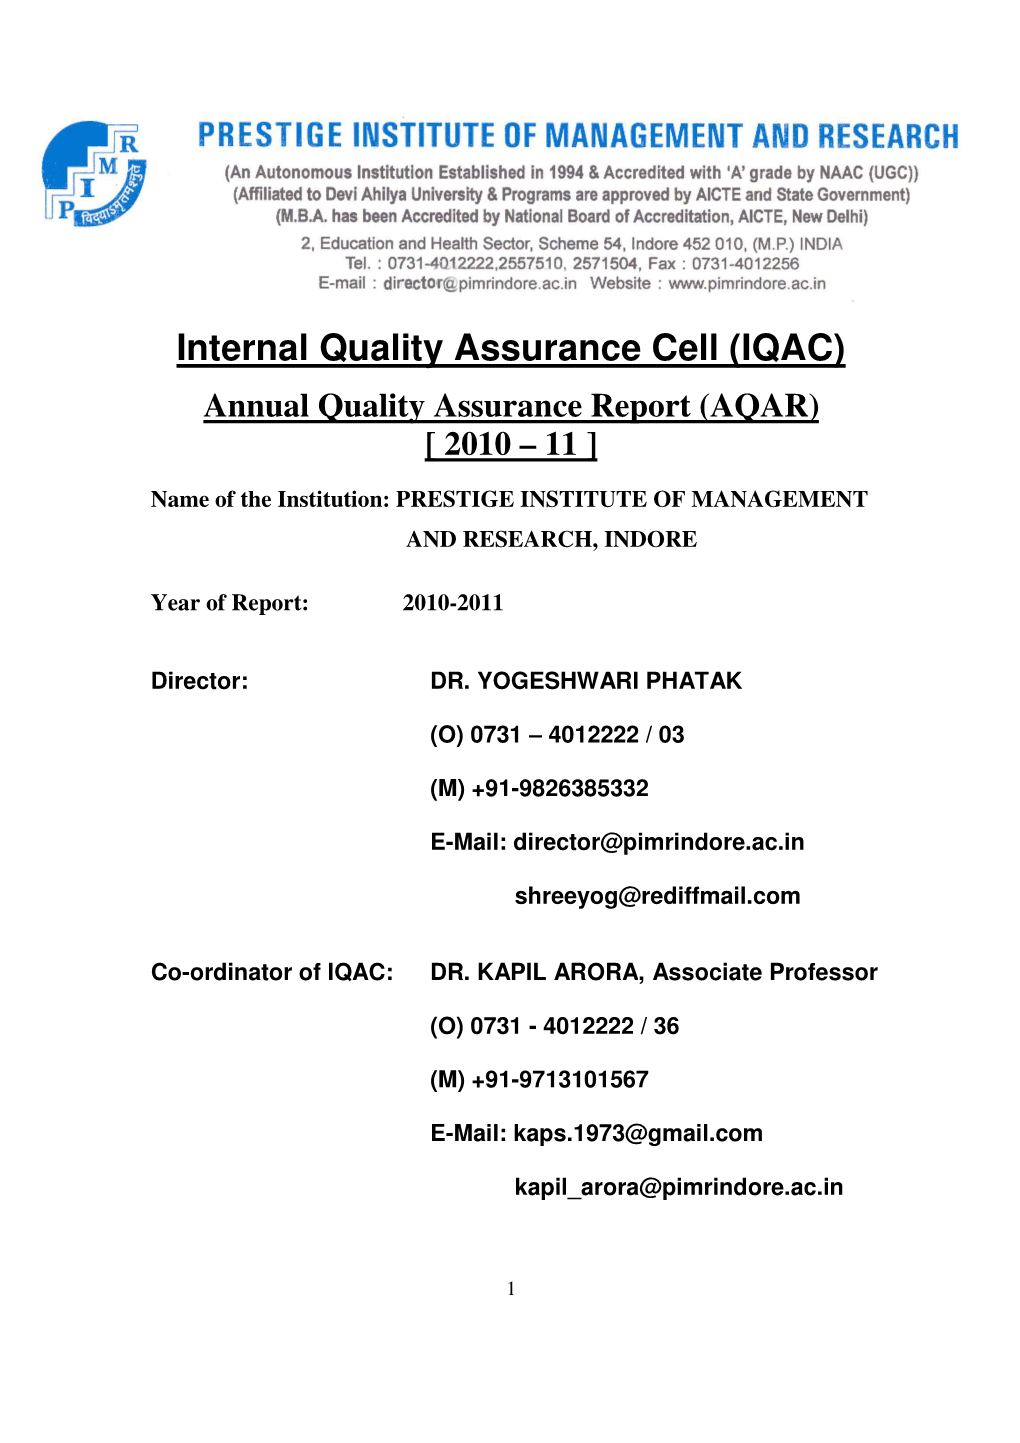 Internal Quality Assurance Cell (IQAC)